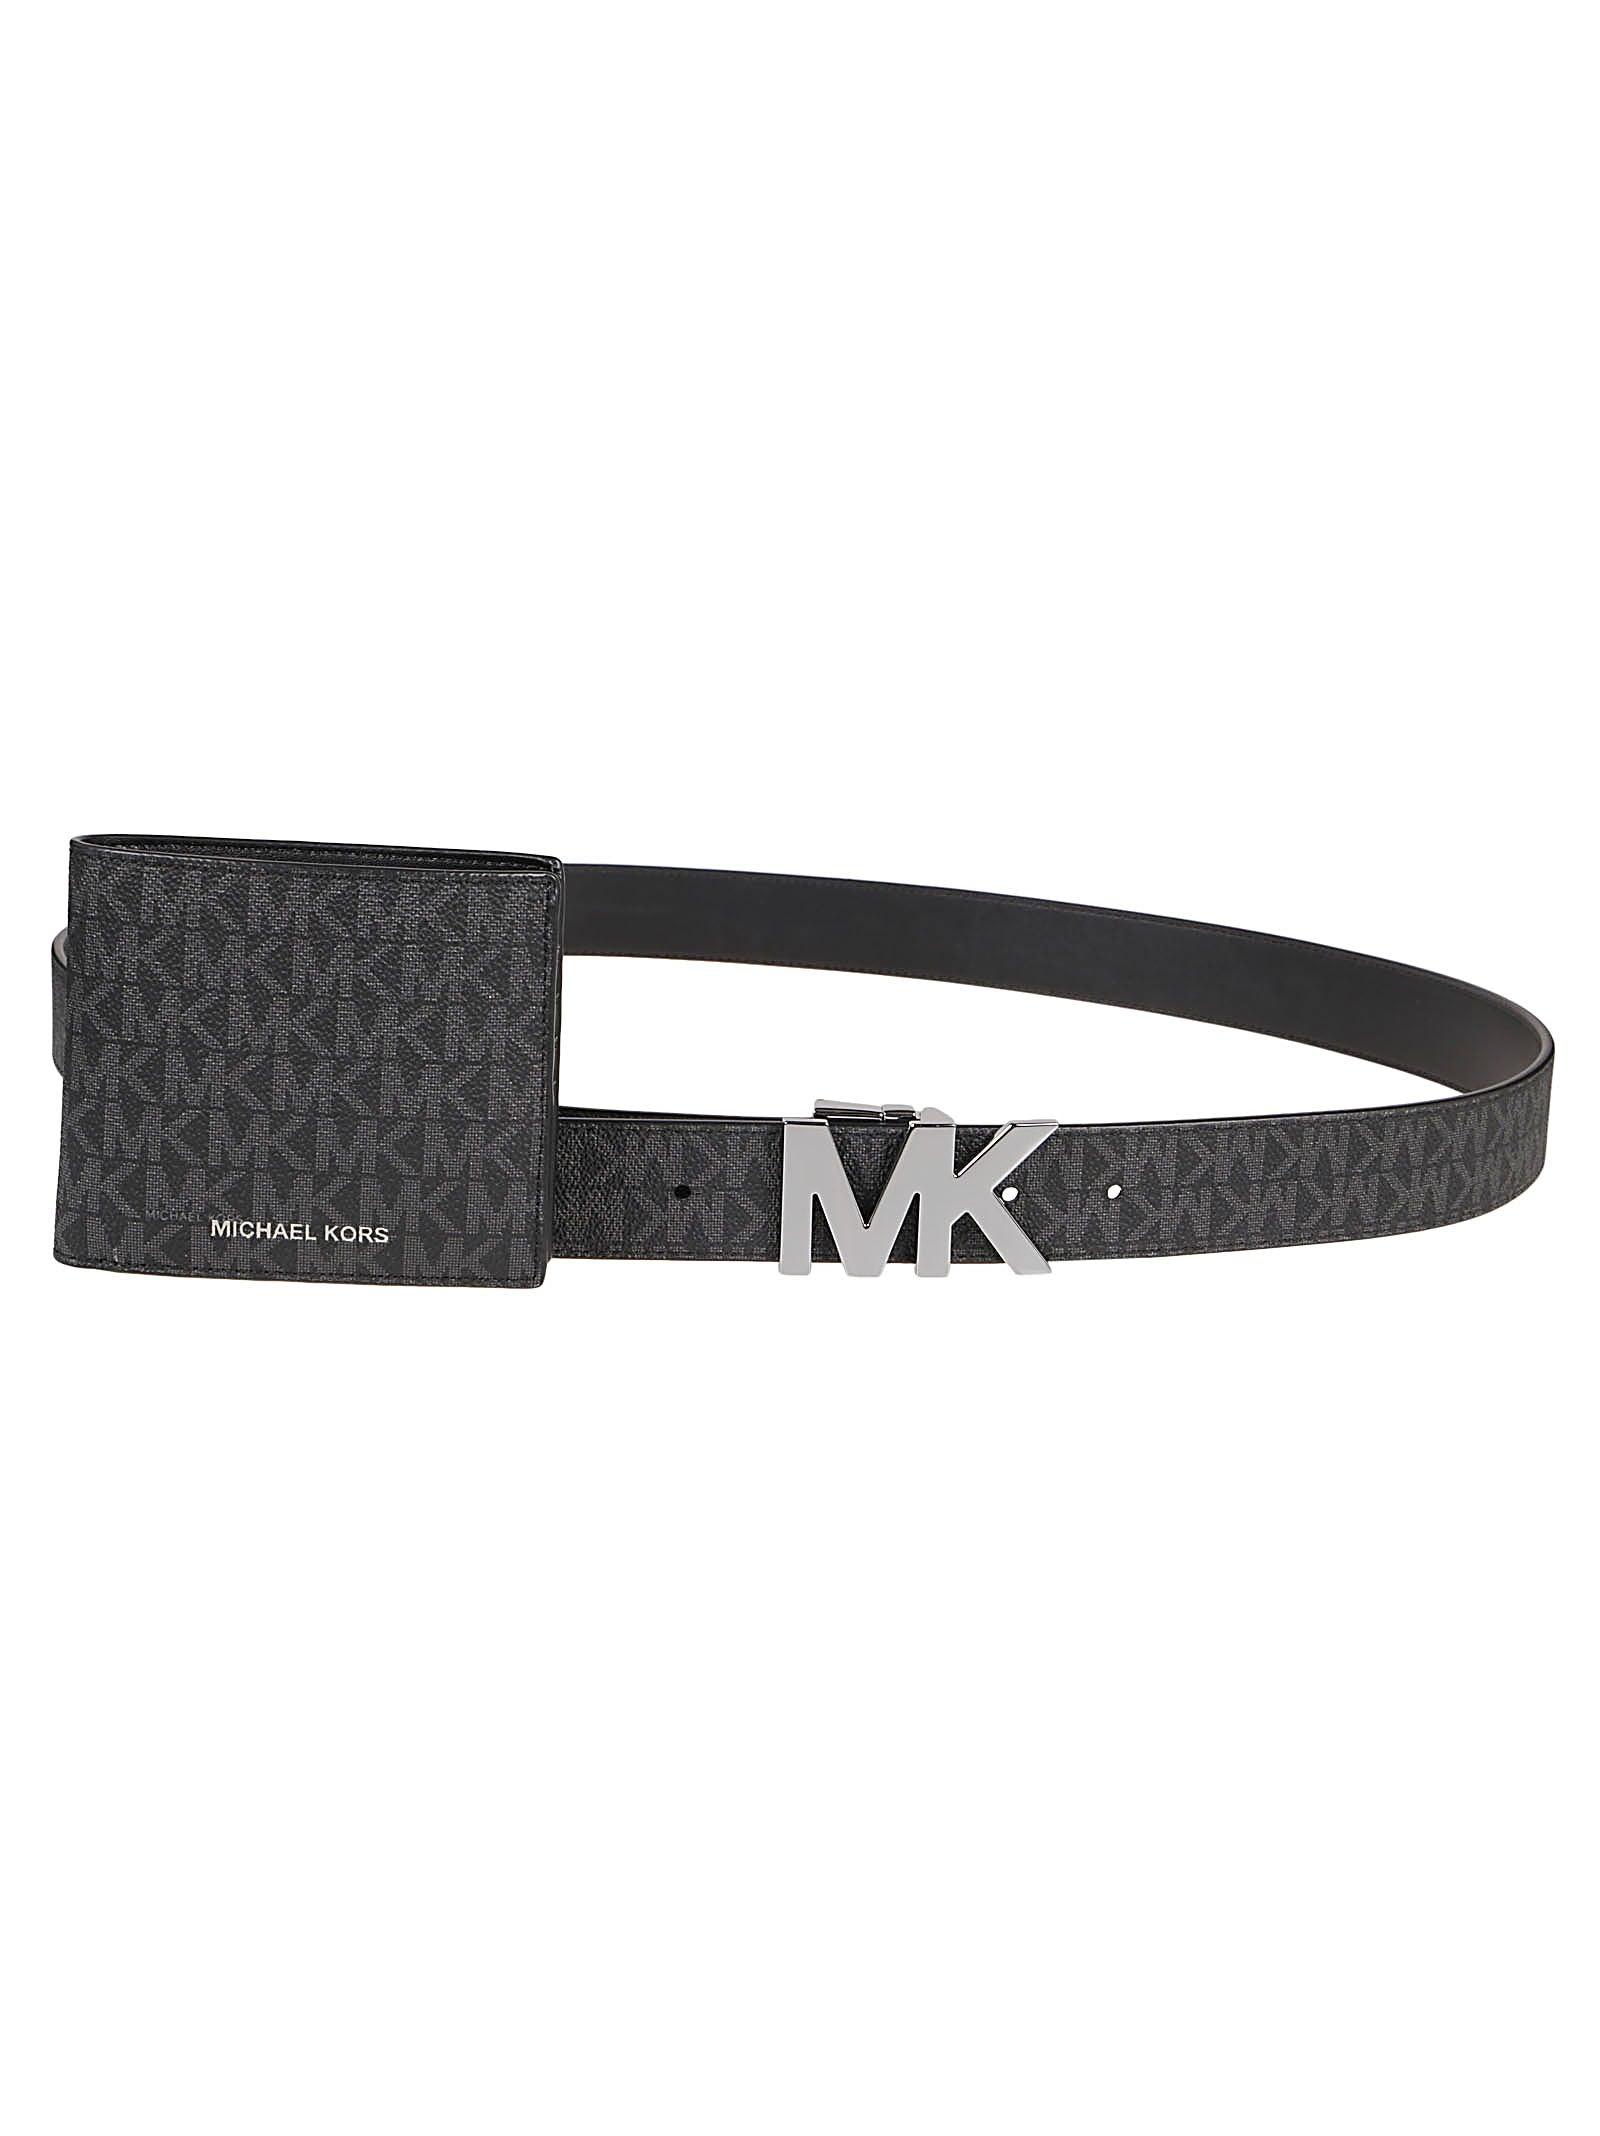 Michael Kors Logo Belt And Monogram Billfold Wallet Set